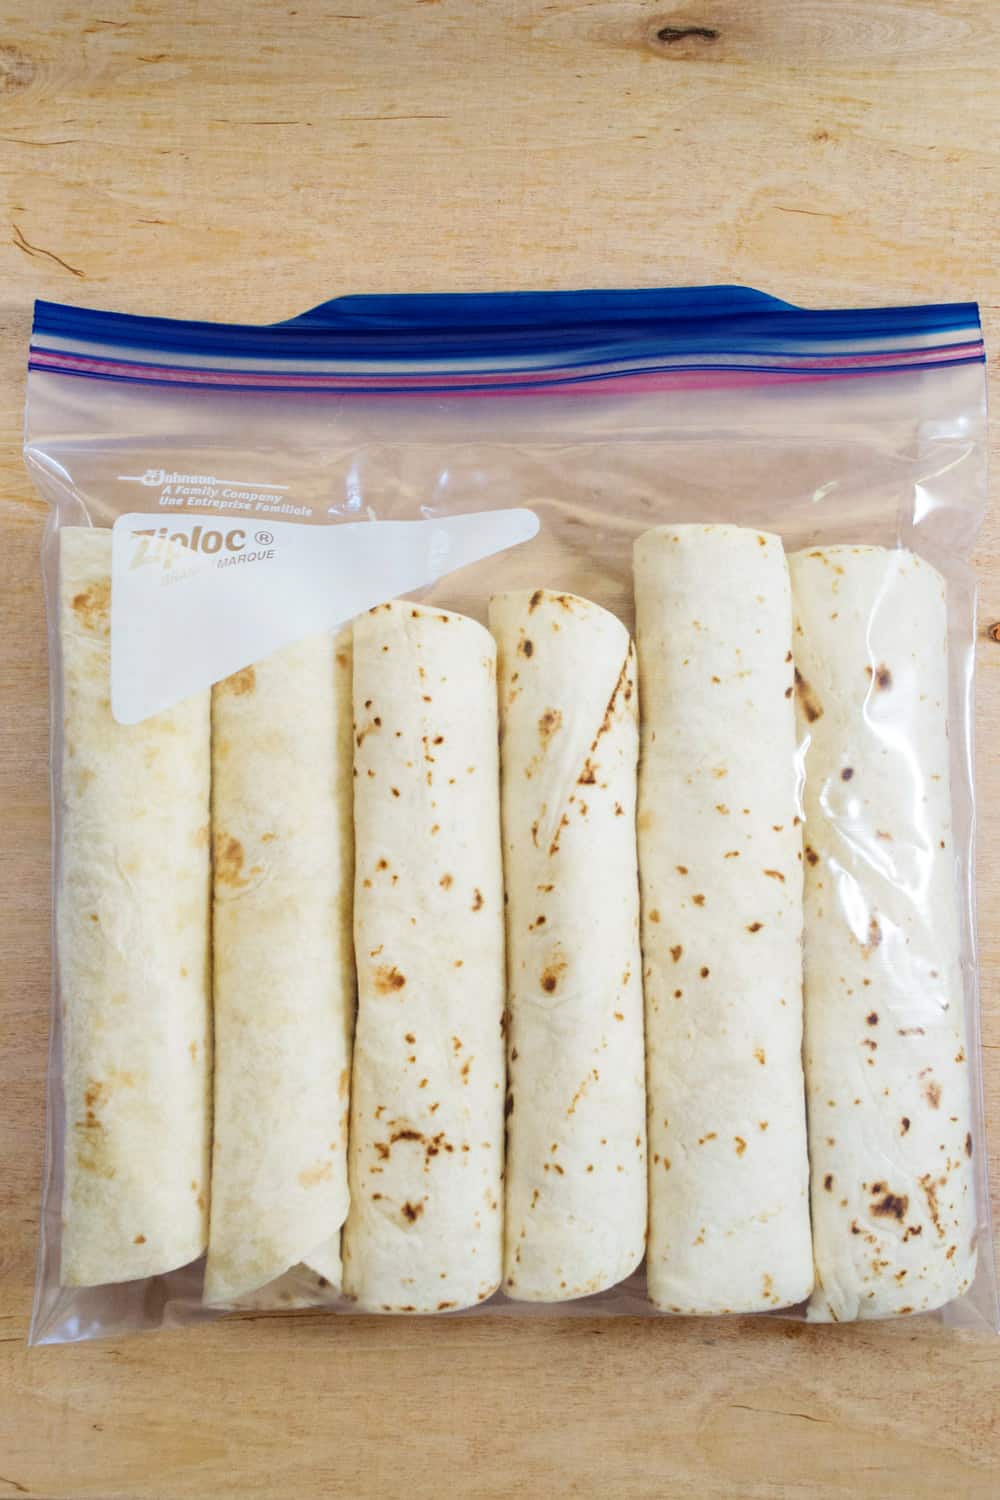 rolled enchiladas in a freezer bag